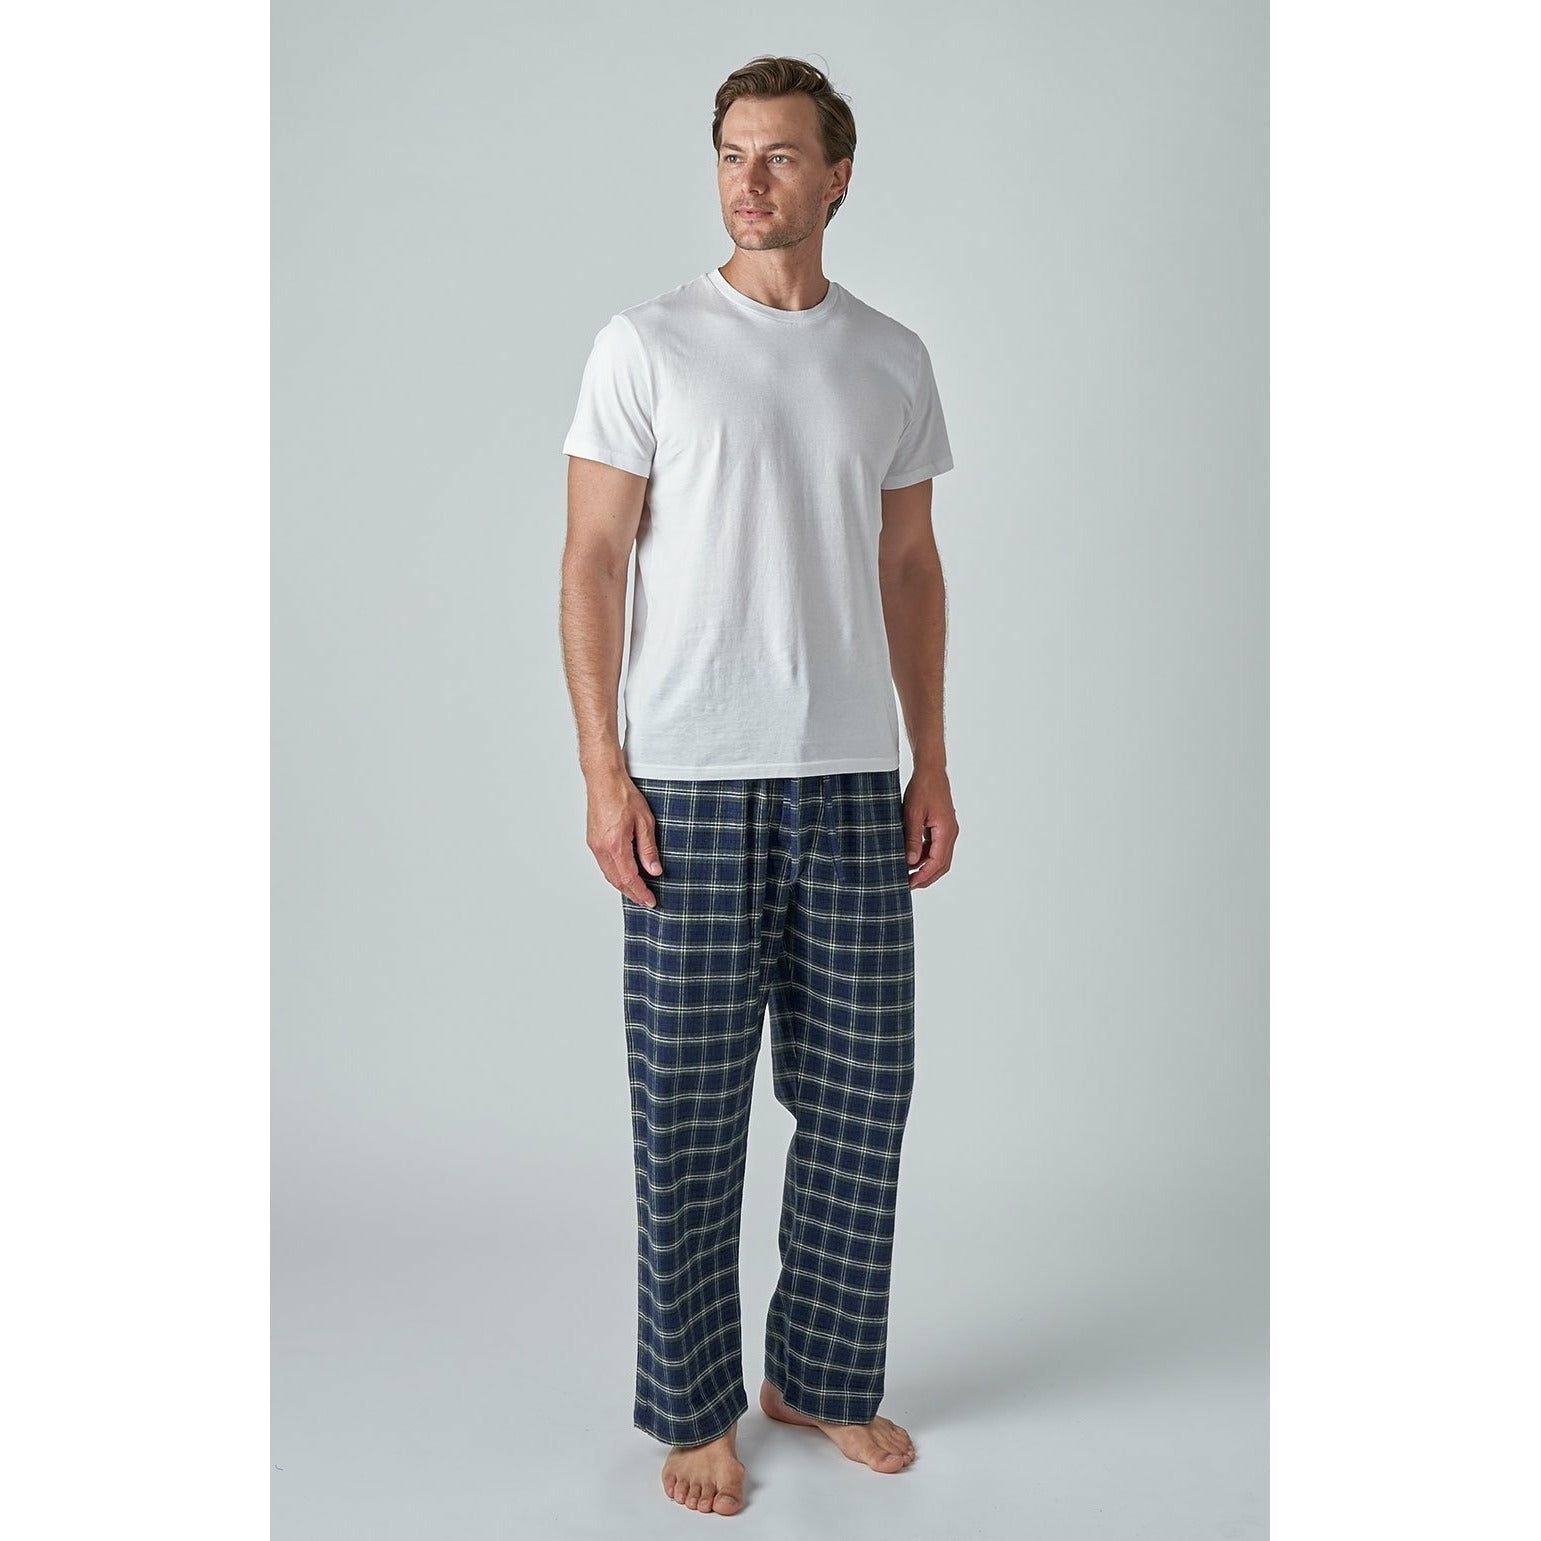 Mens Flannel Pyjama Bottoms(2pcs),Soft Cotton Checked Sleepwear Lounge Pants,Dark  Blue,XL : Amazon.ca: Clothing, Shoes & Accessories